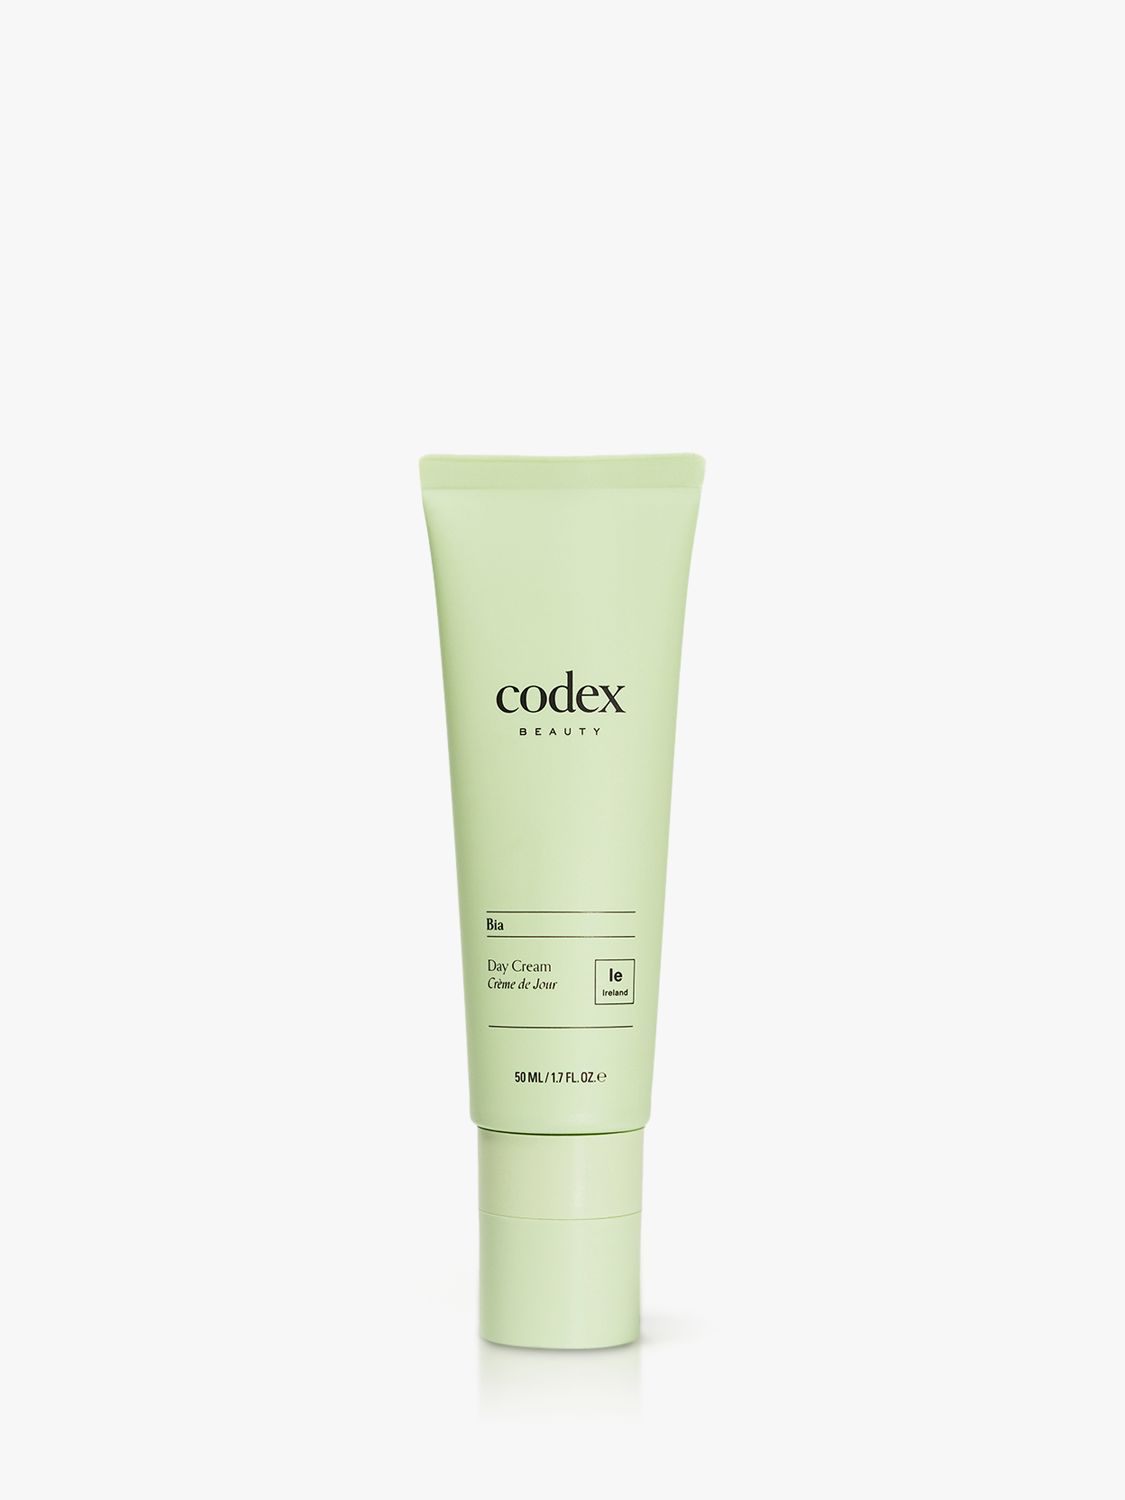 codex beauty day cream